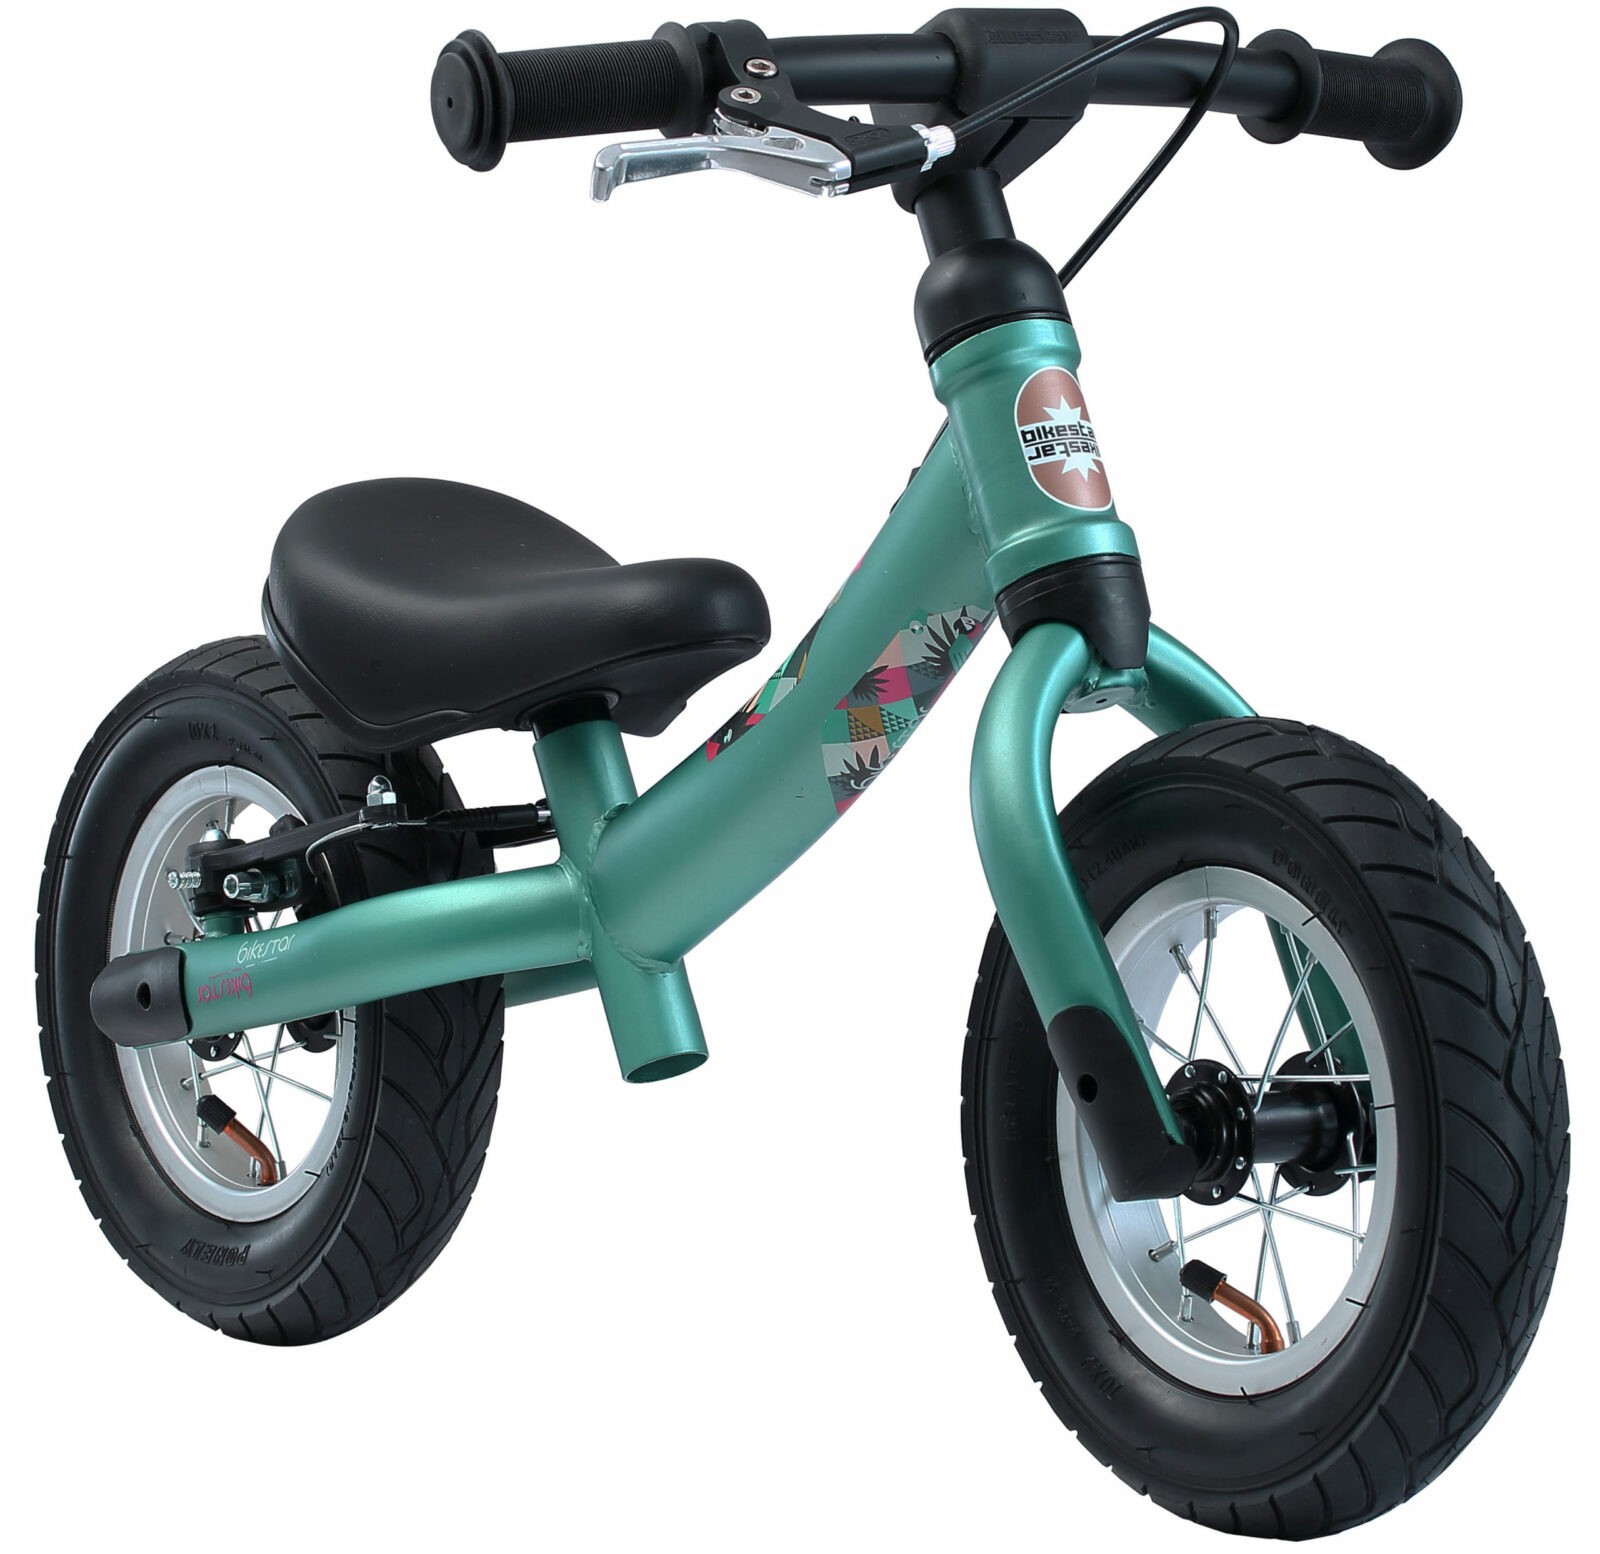 Bikestar, Sport, 1 meegroei loopfiets, 10 inch, groen